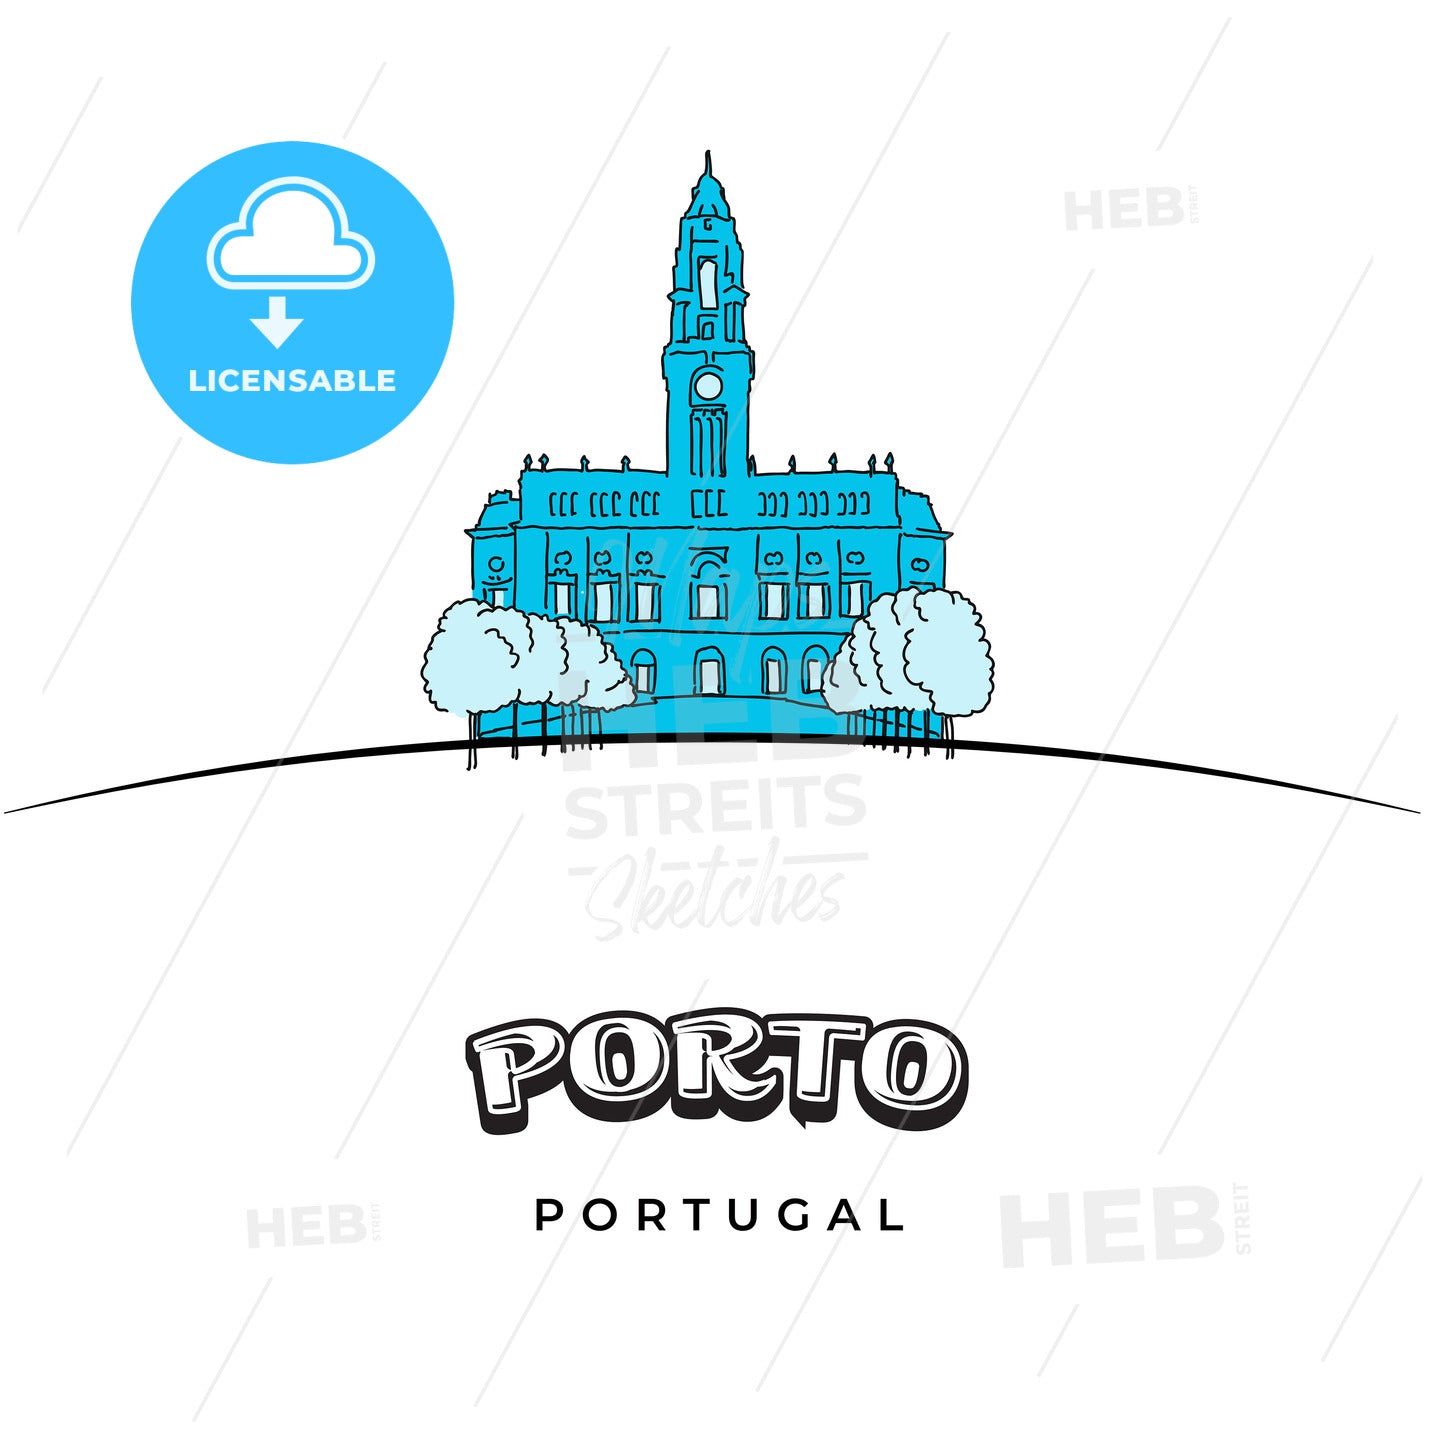 Porto Portugal travel sign – instant download